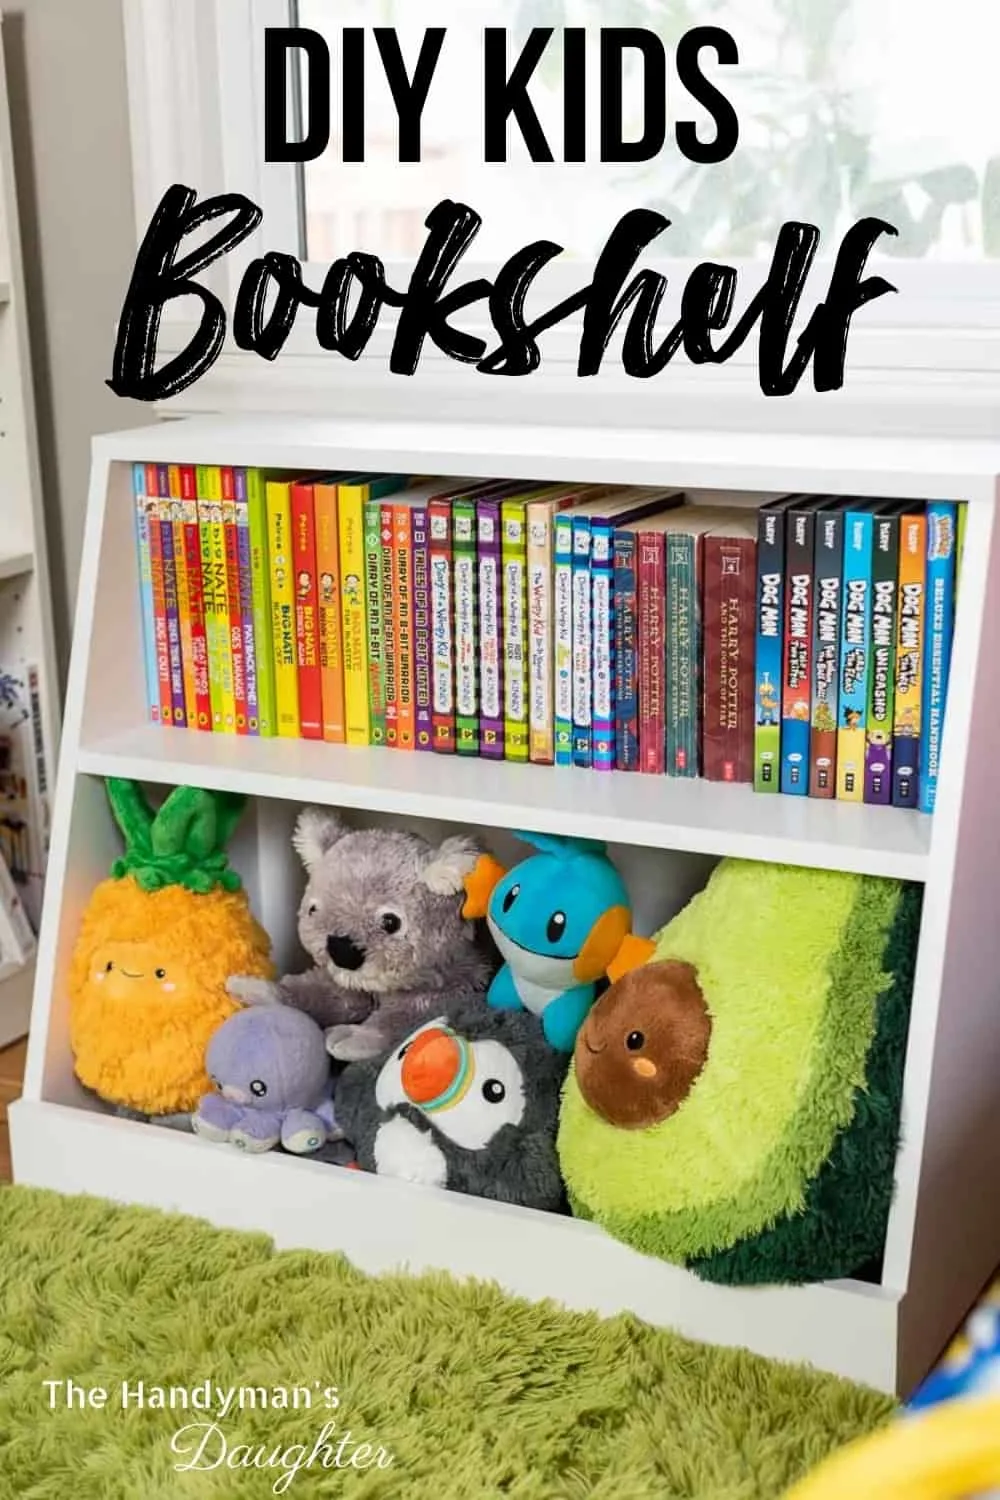 DIY kids bookcase with stuffed animal storage